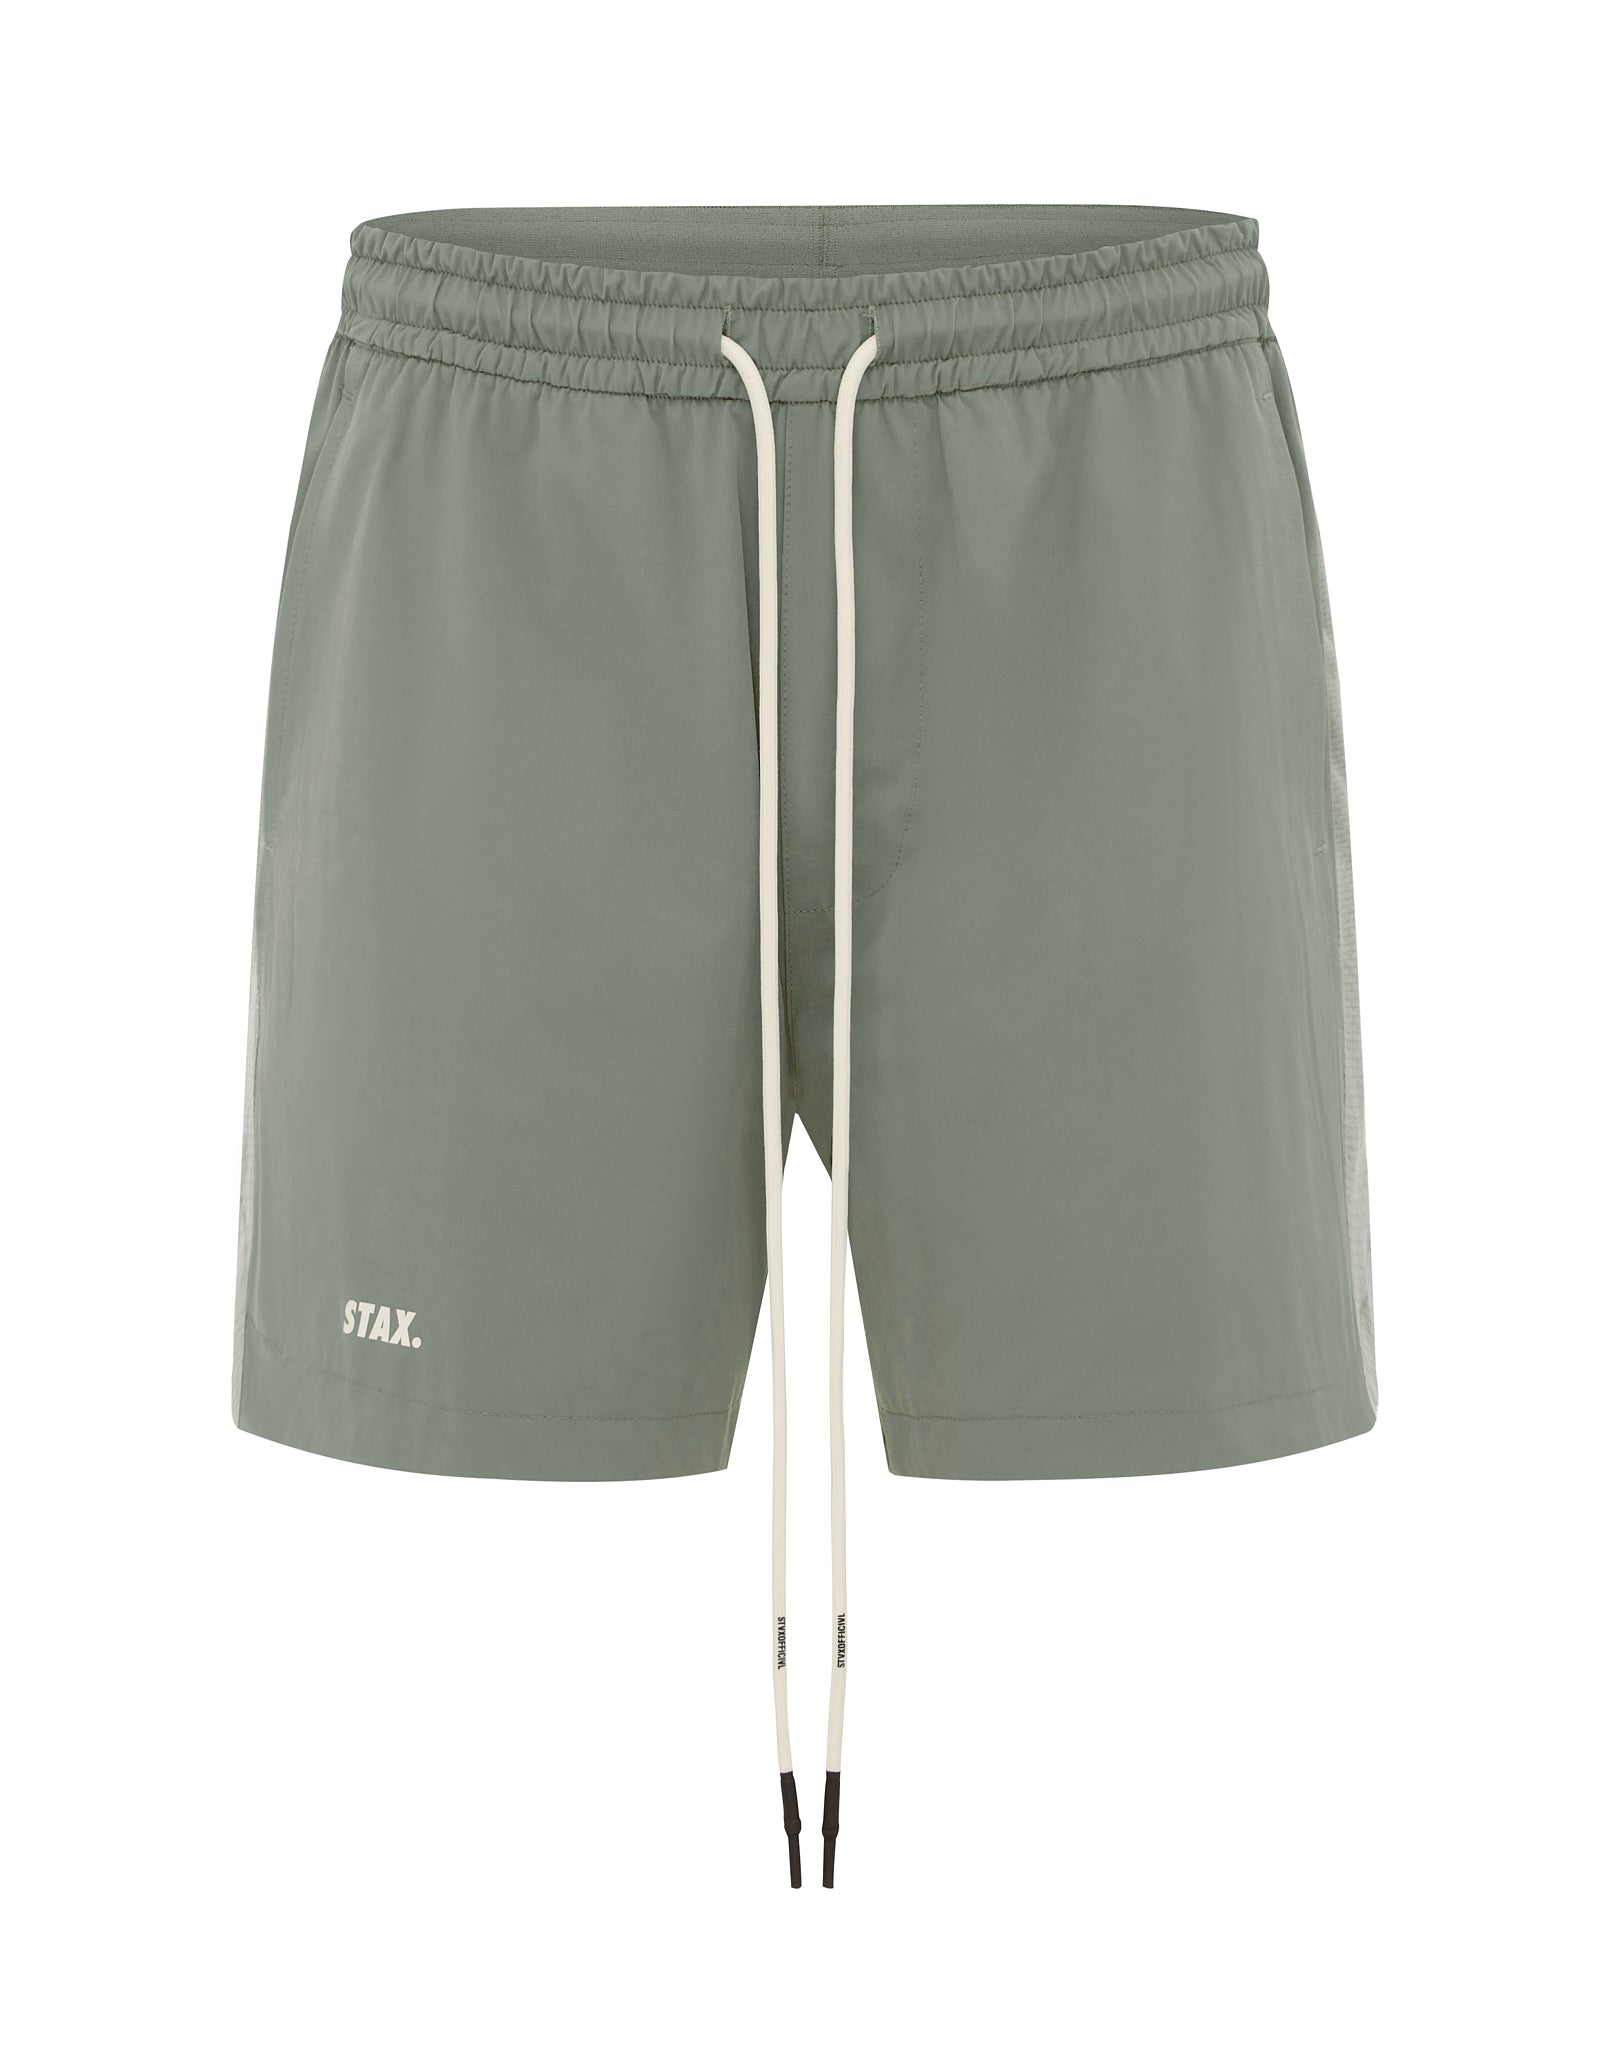 mens-sport-nylon-shorts-sage